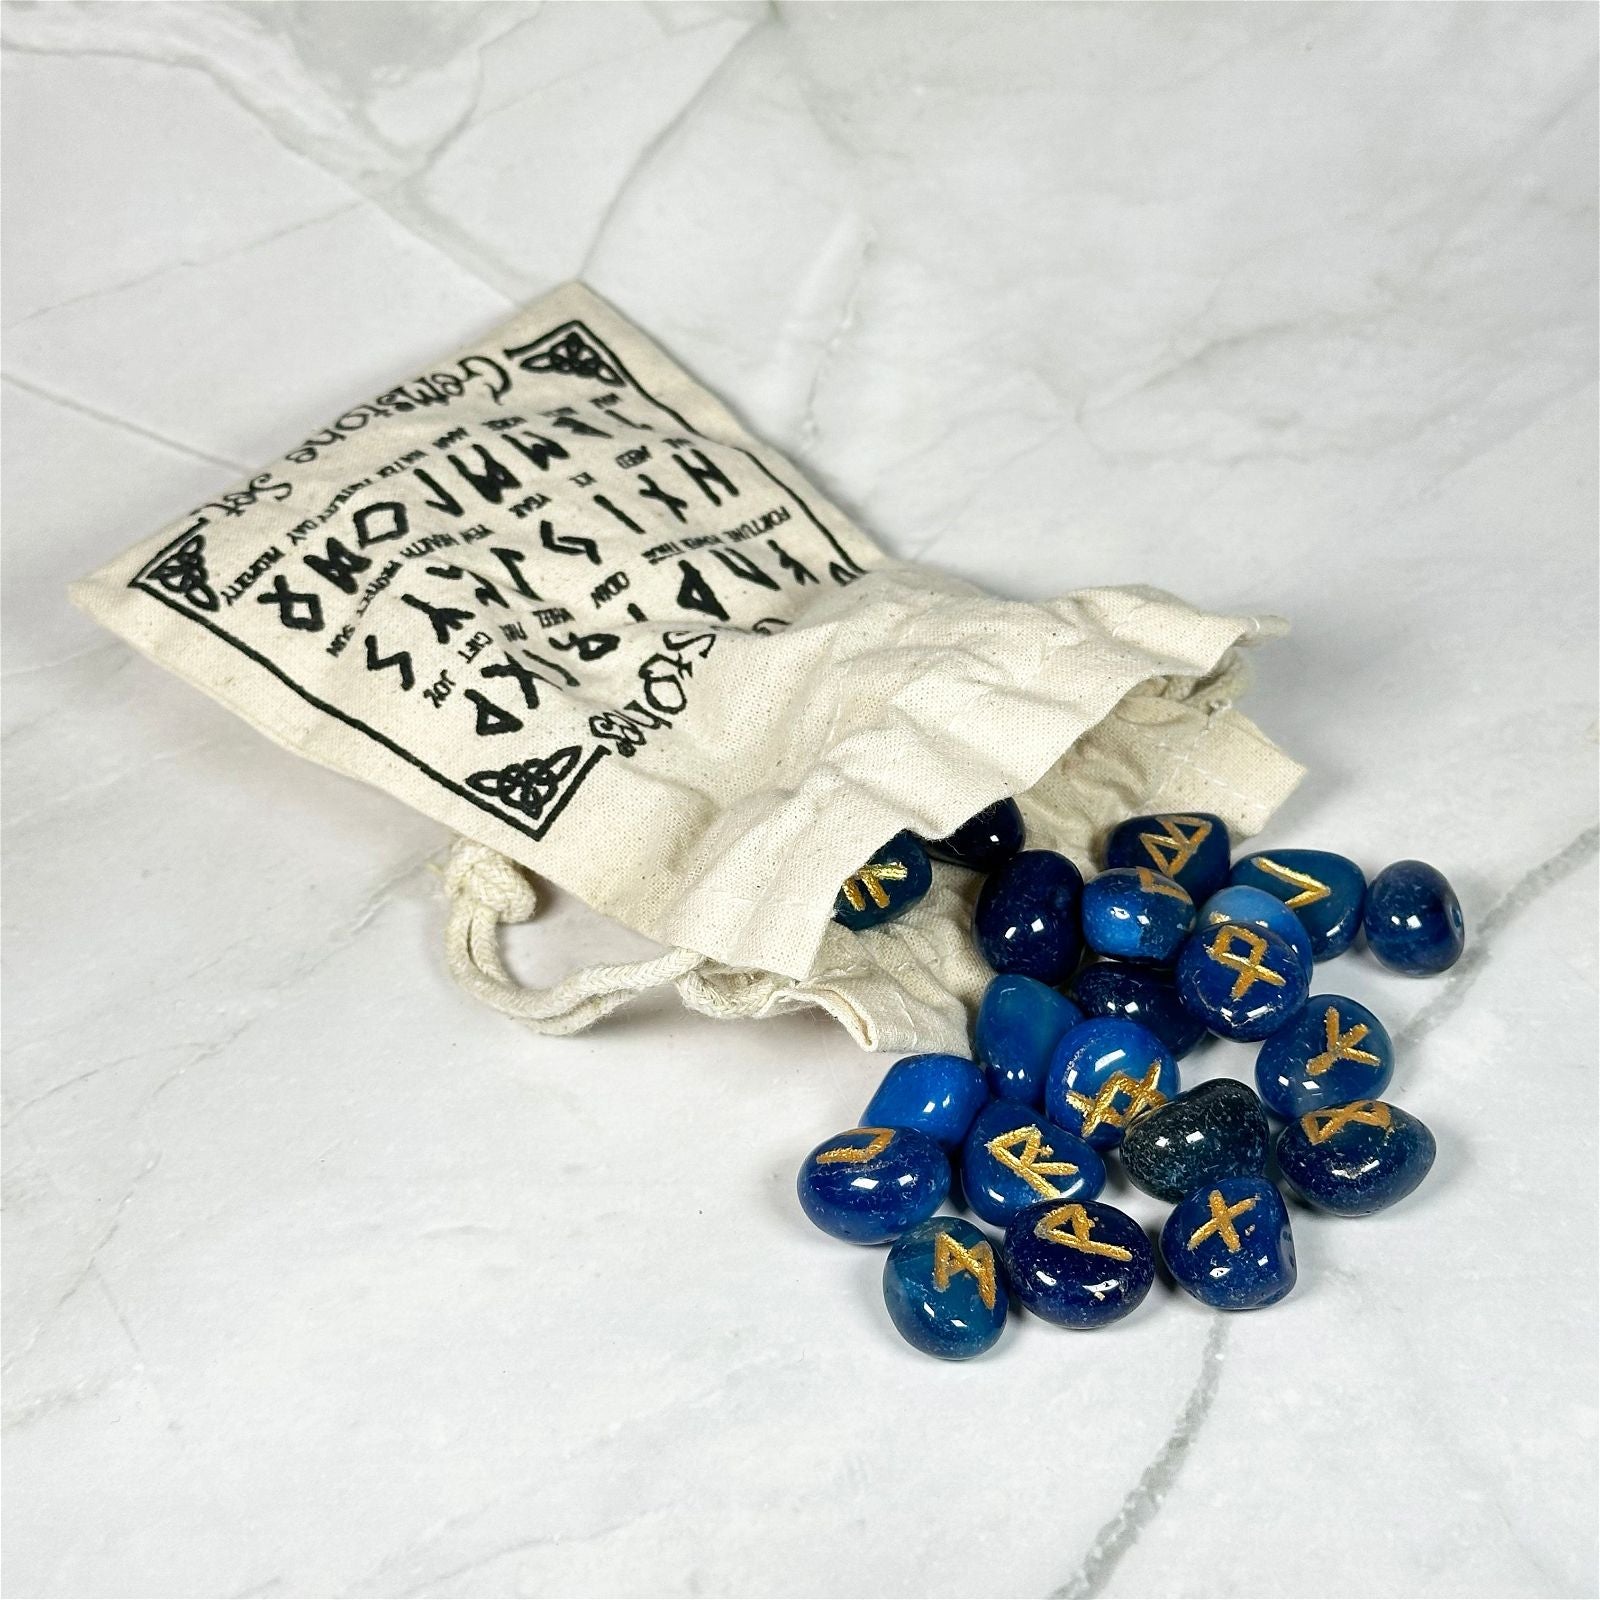 Runes en Onyx Bleu et pochette - Aeternum - Runes en Onyx Bleu et pochette - Aeternum - Runes en Onyx Bleu et pochette - Aeternum - #original_alt_text# - #esoterisme# - #wicca#  - #esoterisme# - #wicca#  - # boutique ésoterisme# - #wicca# 